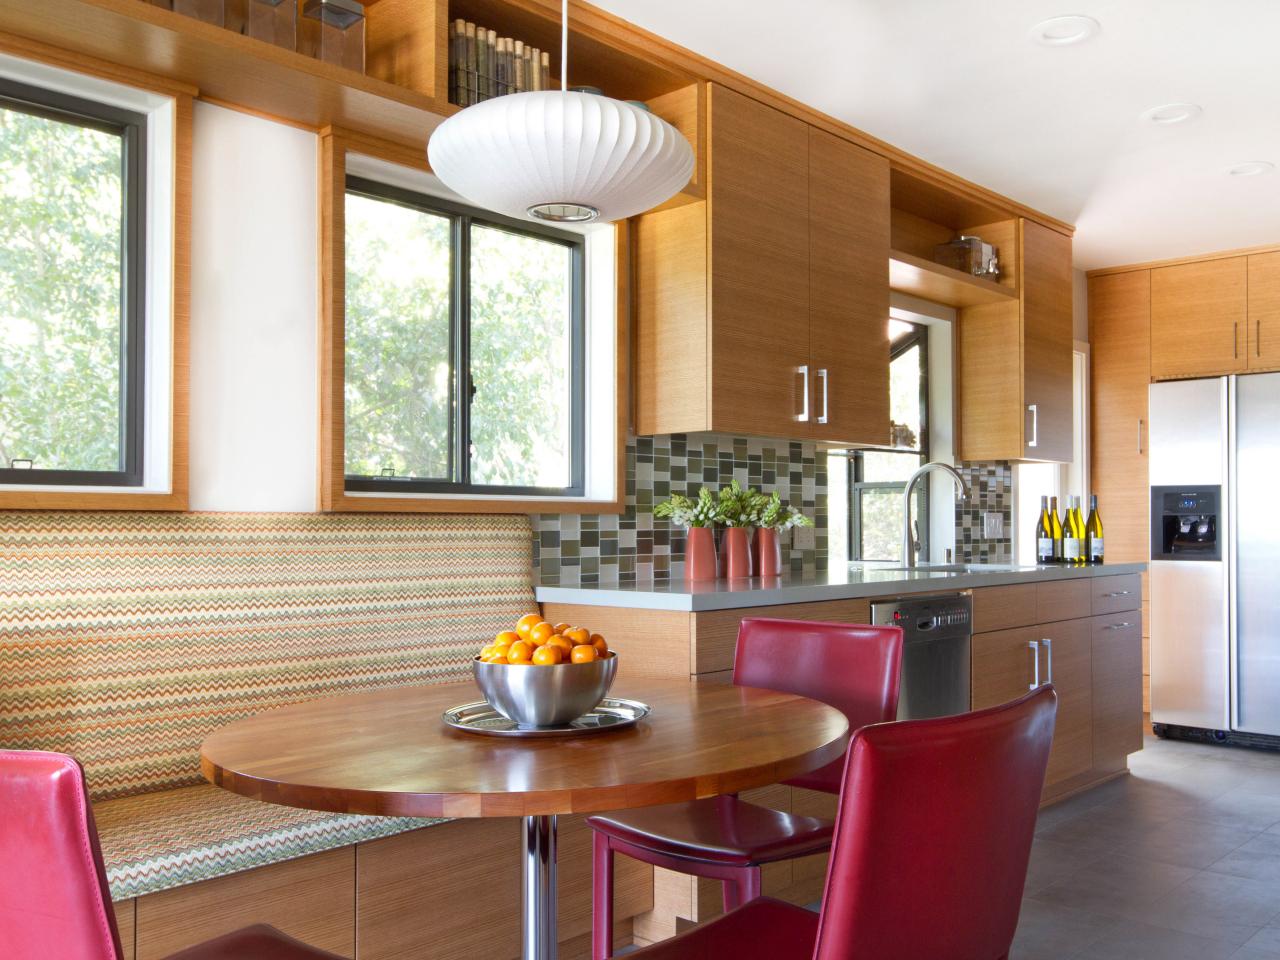 Image Of Kitchen Window Treatment Design Ideas Living Room Window